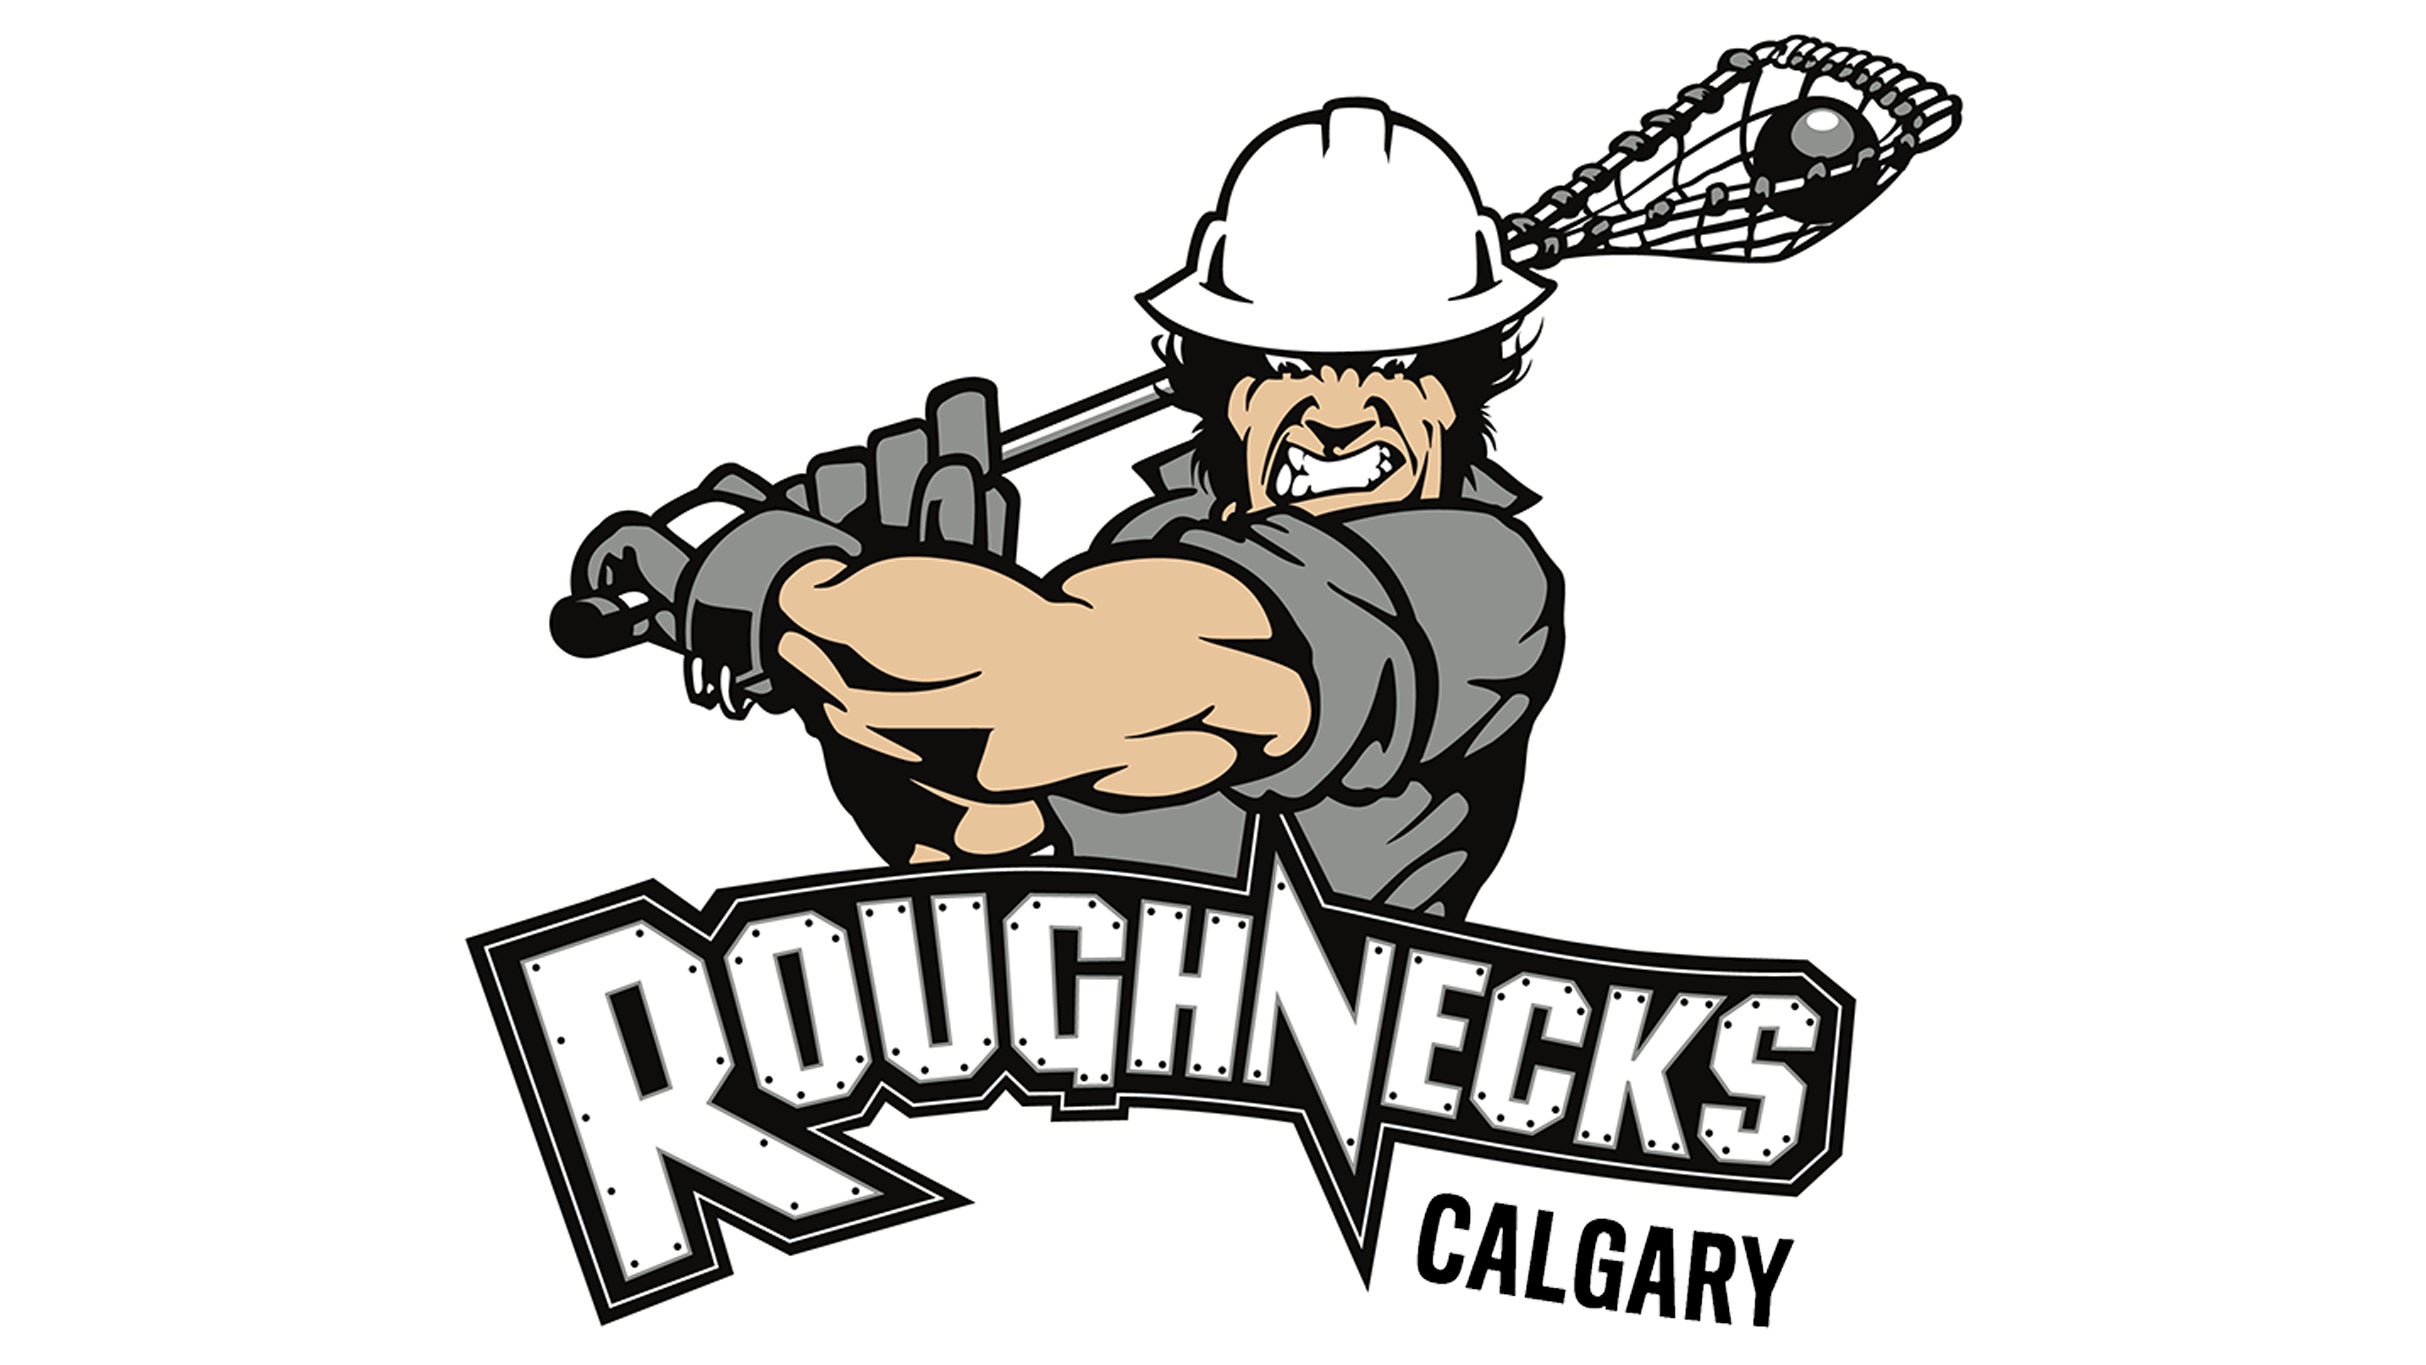 Calgary Roughnecks vs. Philadelphia Wings in Calgary promo photo for Stampeders STH  presale offer code